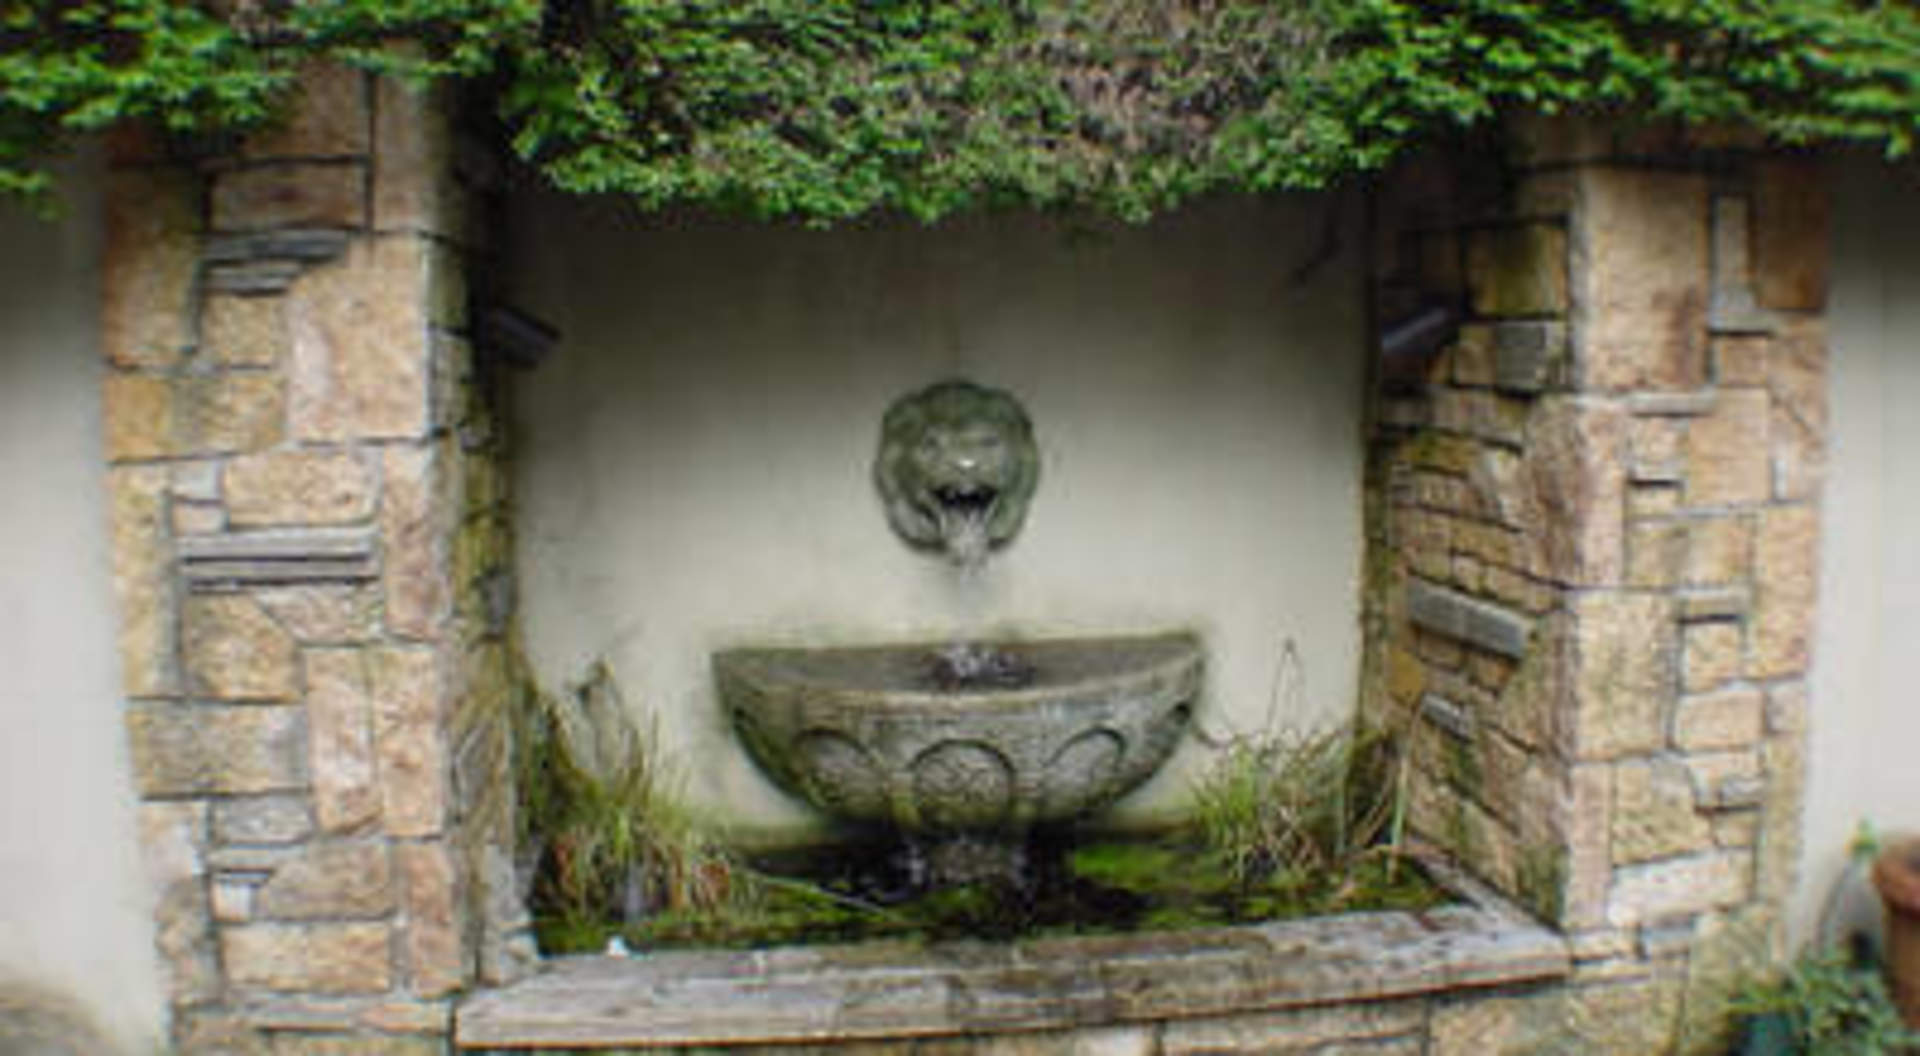 Trickling Fountain in Courtyard